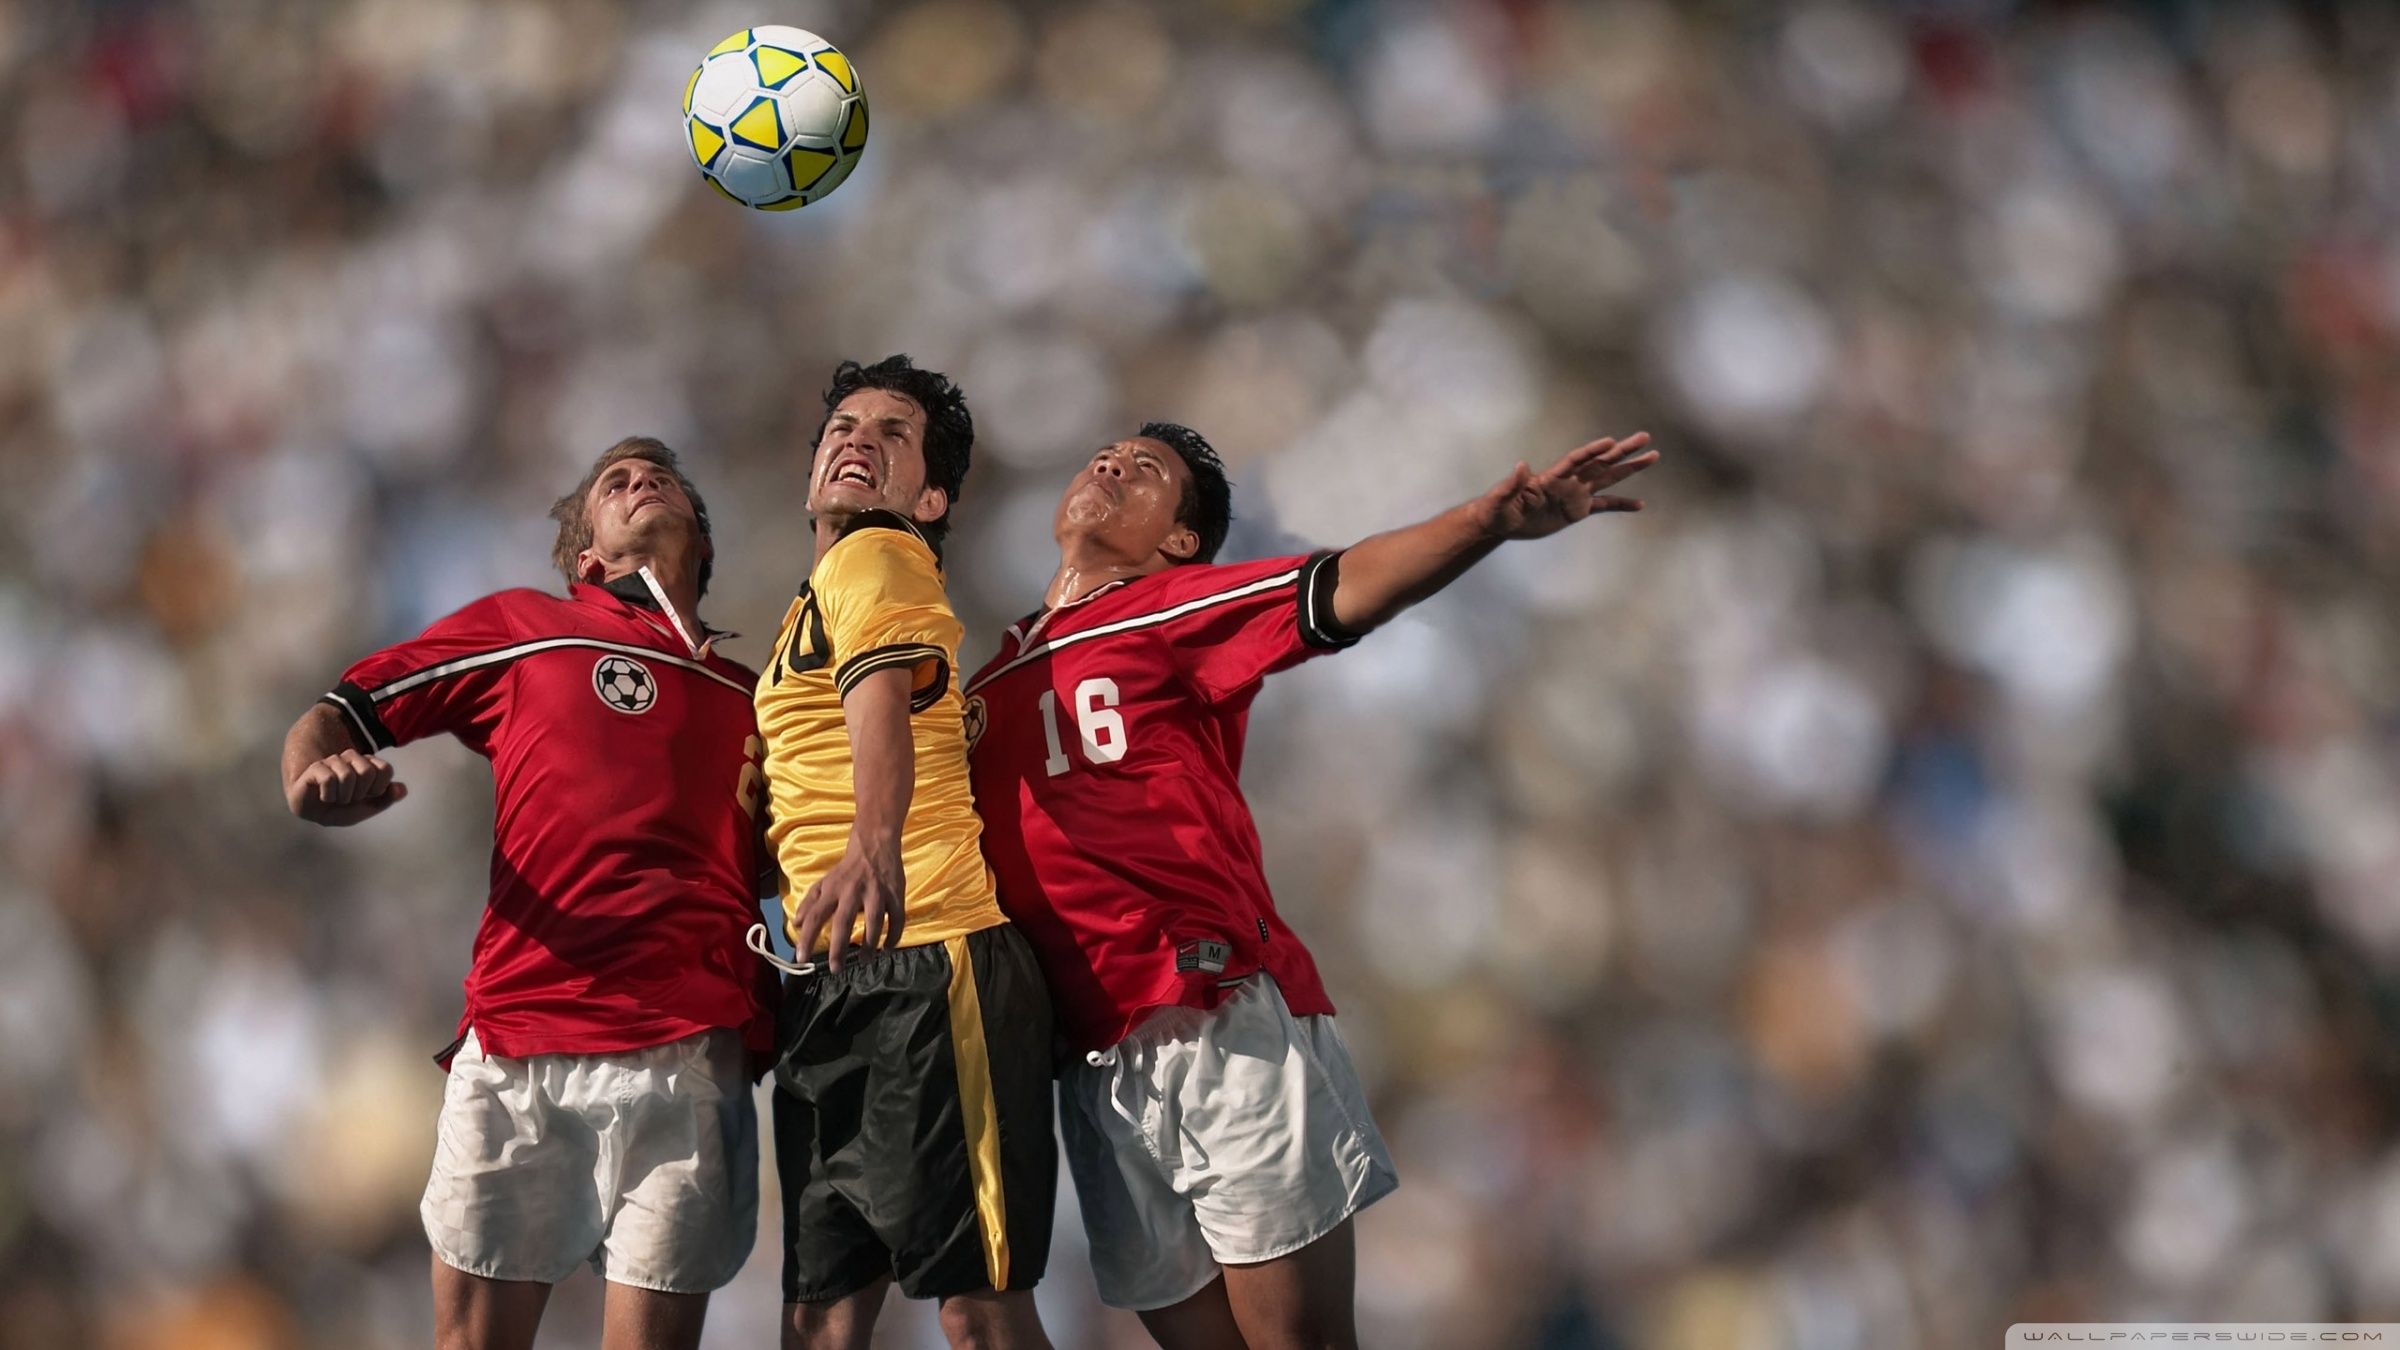 Soccer Players In Action Ultra HD Desktop Background Wallpaper for 4K UHD TV, Tablet